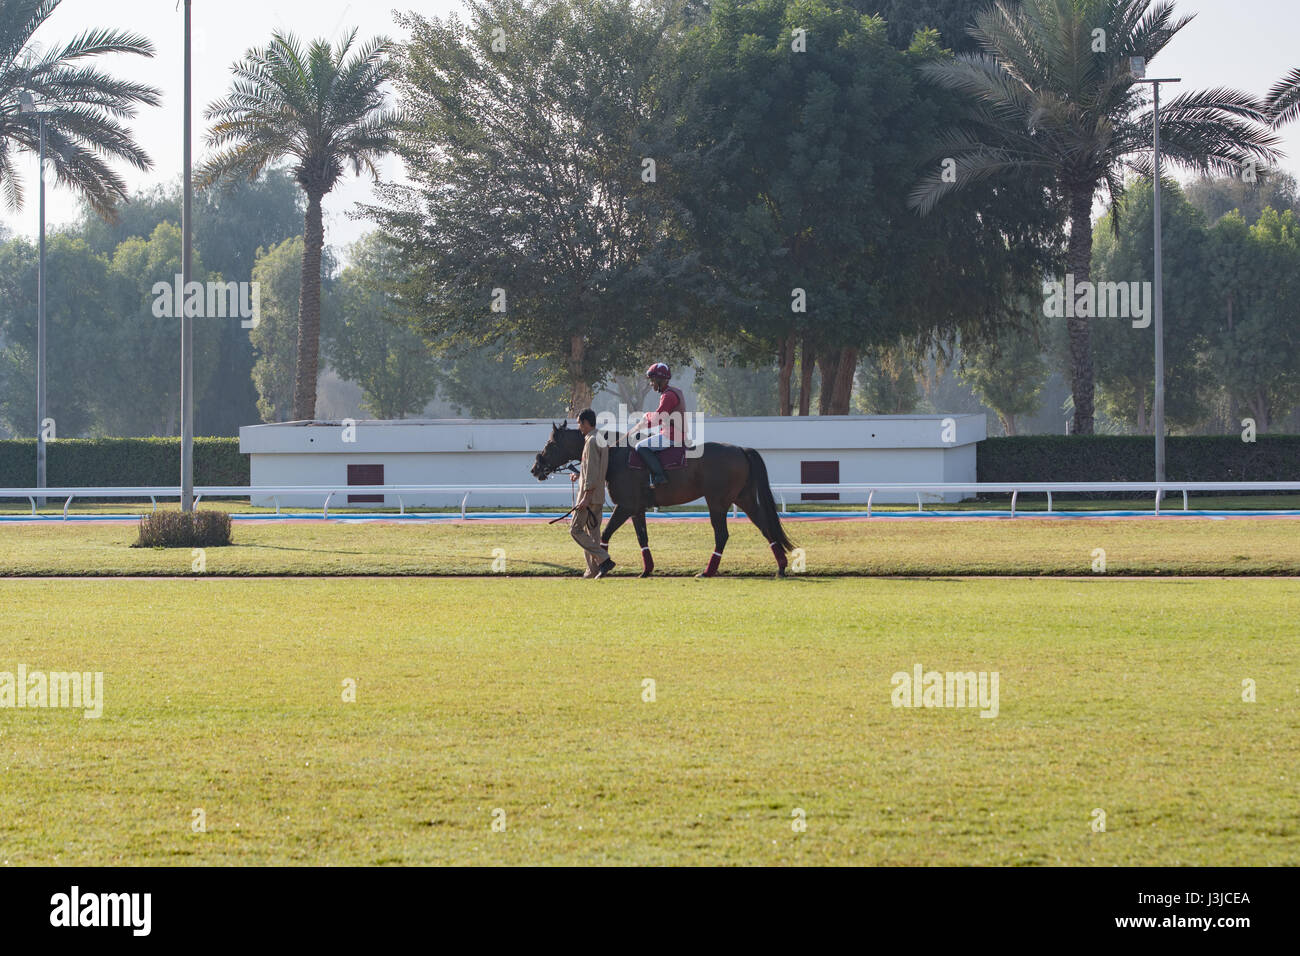 United Arab Emirates - Man riding racing horse in Dubai Stock Photo